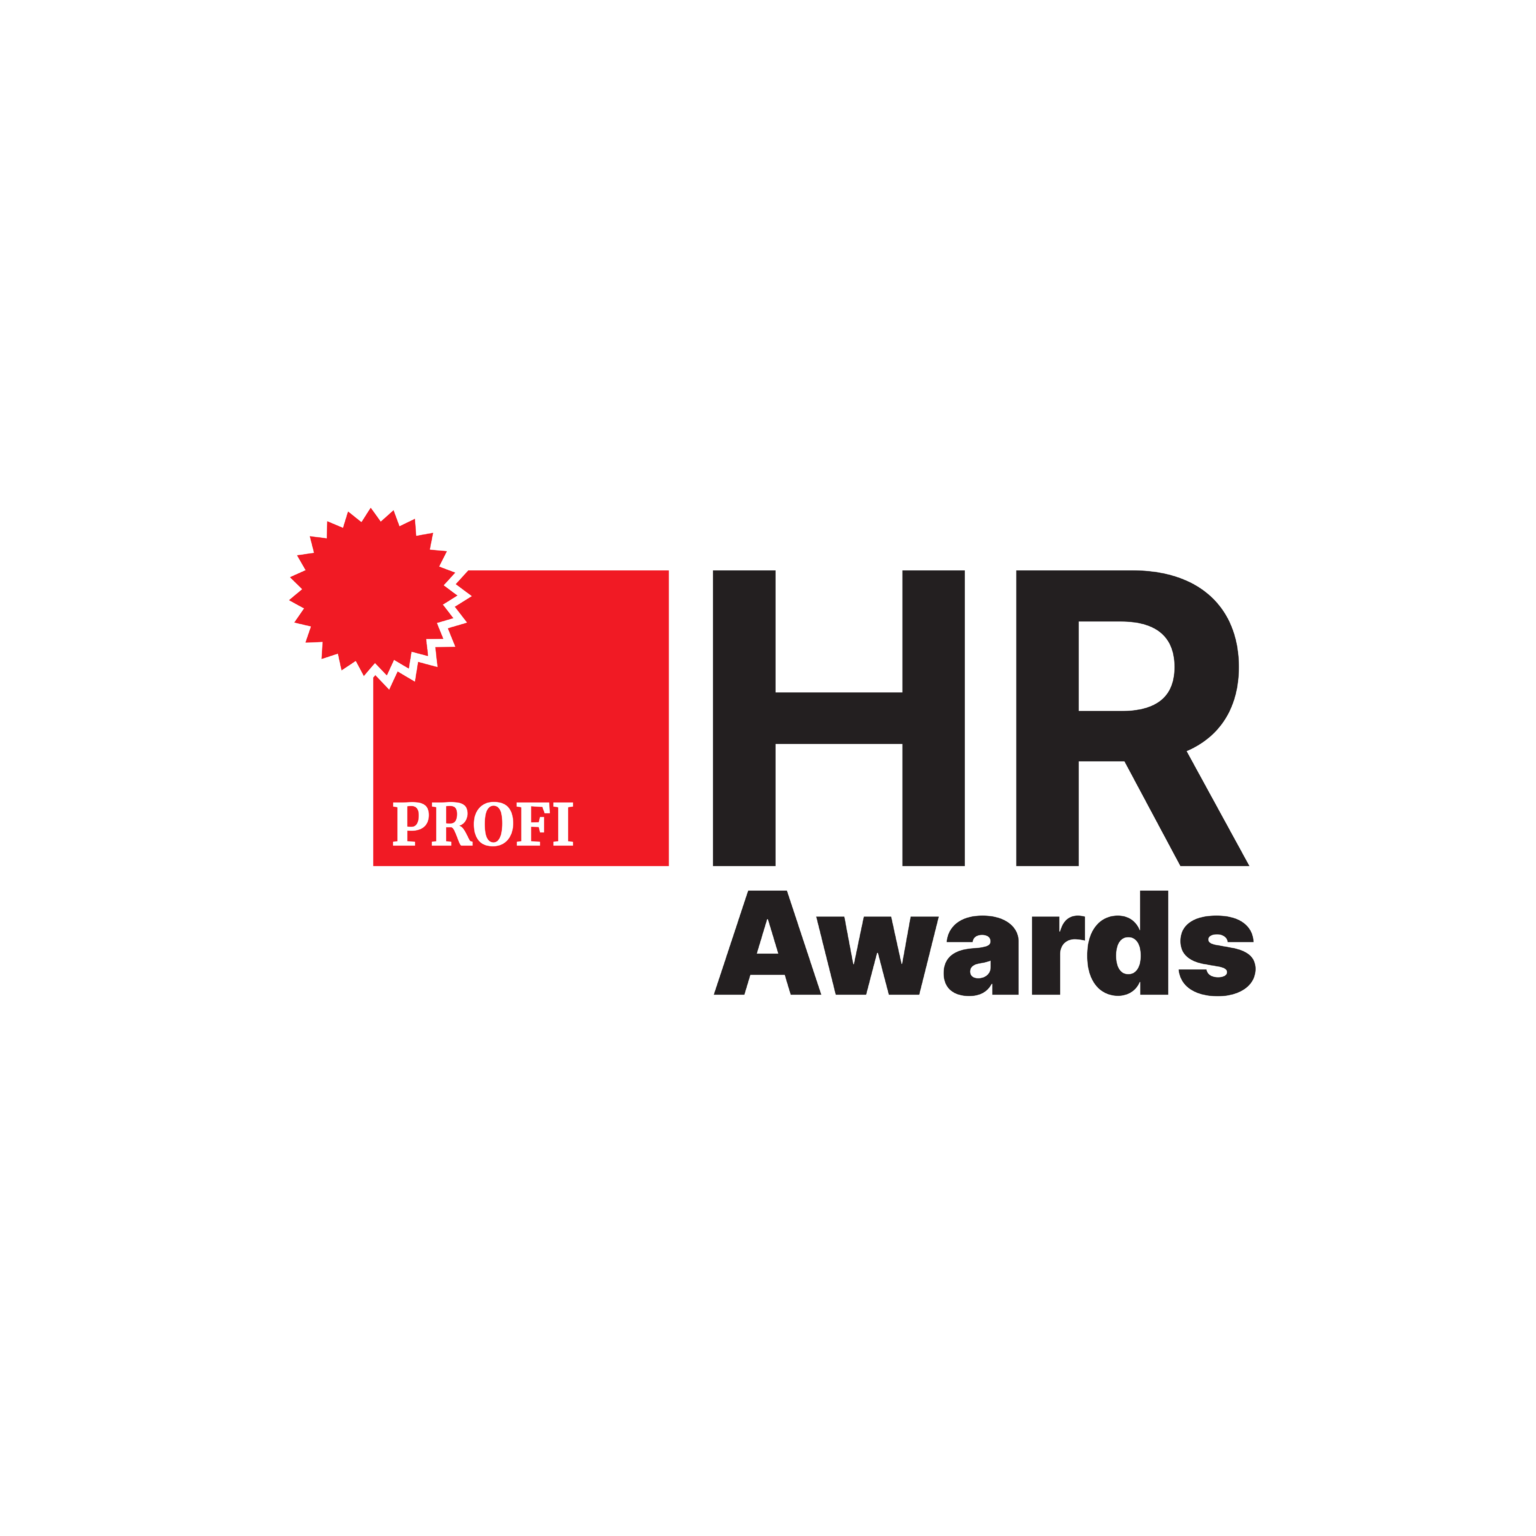 Profi_HR_Award_logo-1-1536x1536